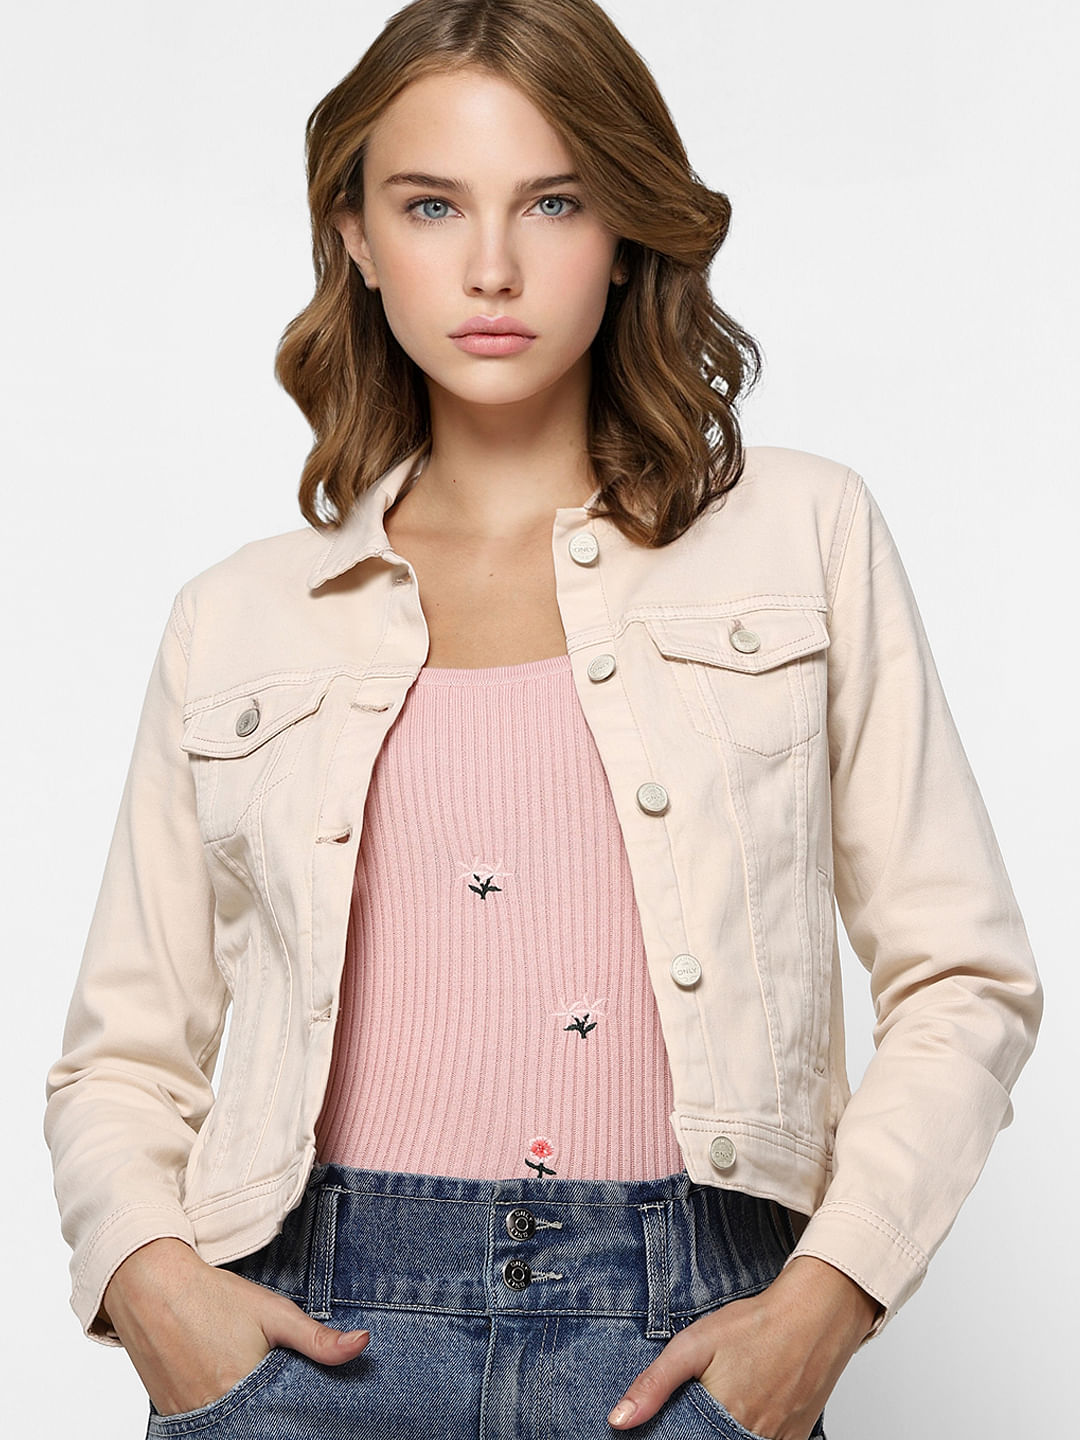 discount 98% SCORPIO vest Gray/Pink S WOMEN FASHION Jackets Combined 